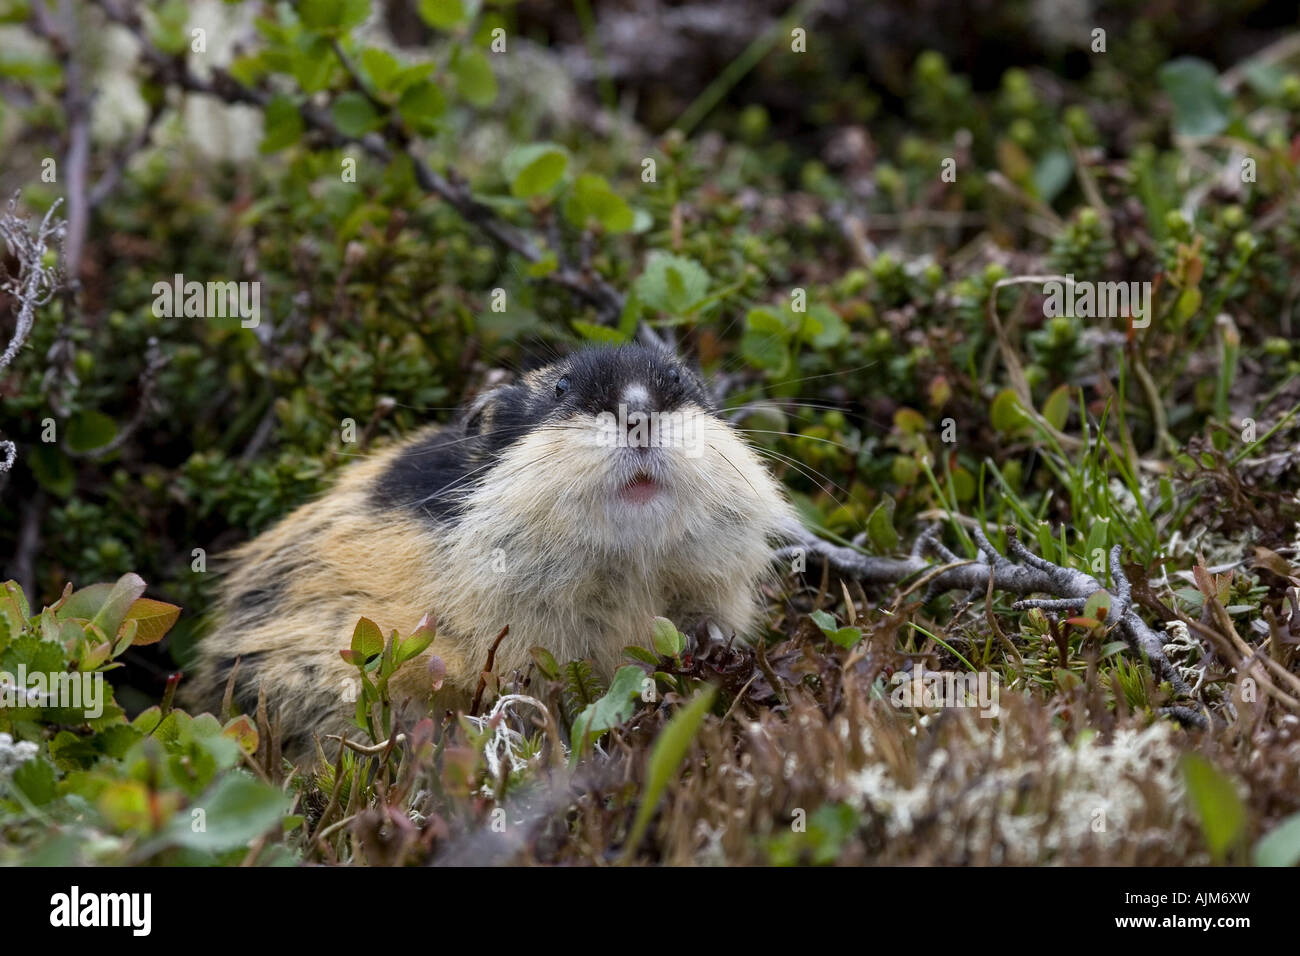 Norway lemming (Lemmus lemmus), in habitat, Norway Stock Photo